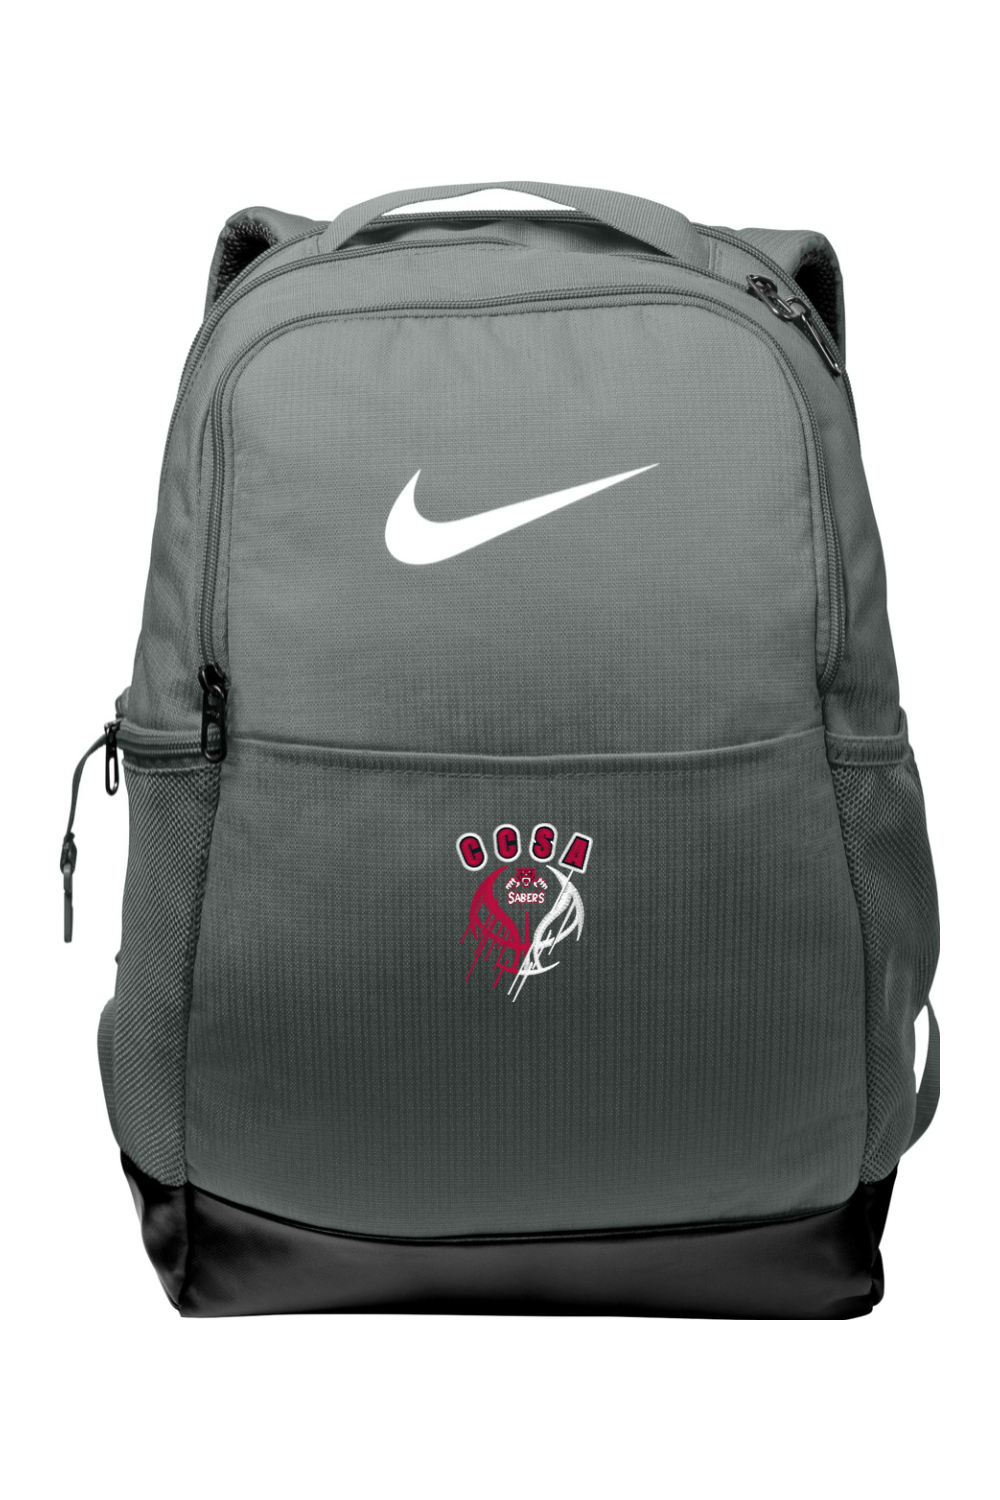 CCSA Basketball Embroidered Nike Brasilia Medium Backpack